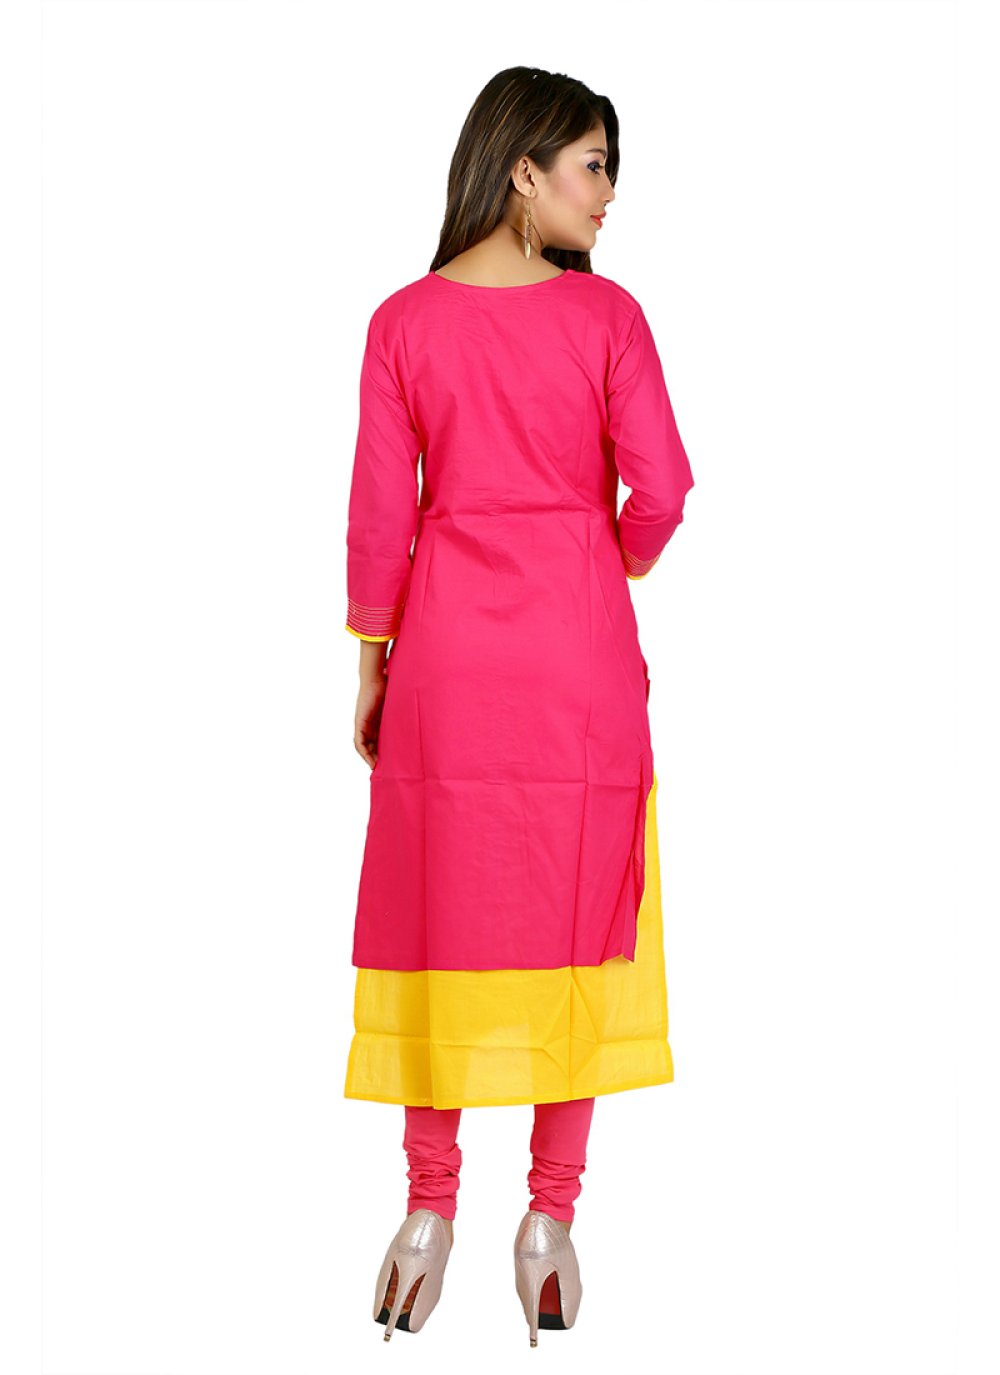 Buy Jaipur Kurti Pink And Yellow Patiala Salwar Kameez With Dupatta Online  at Low Prices in India  Paytmmallcom